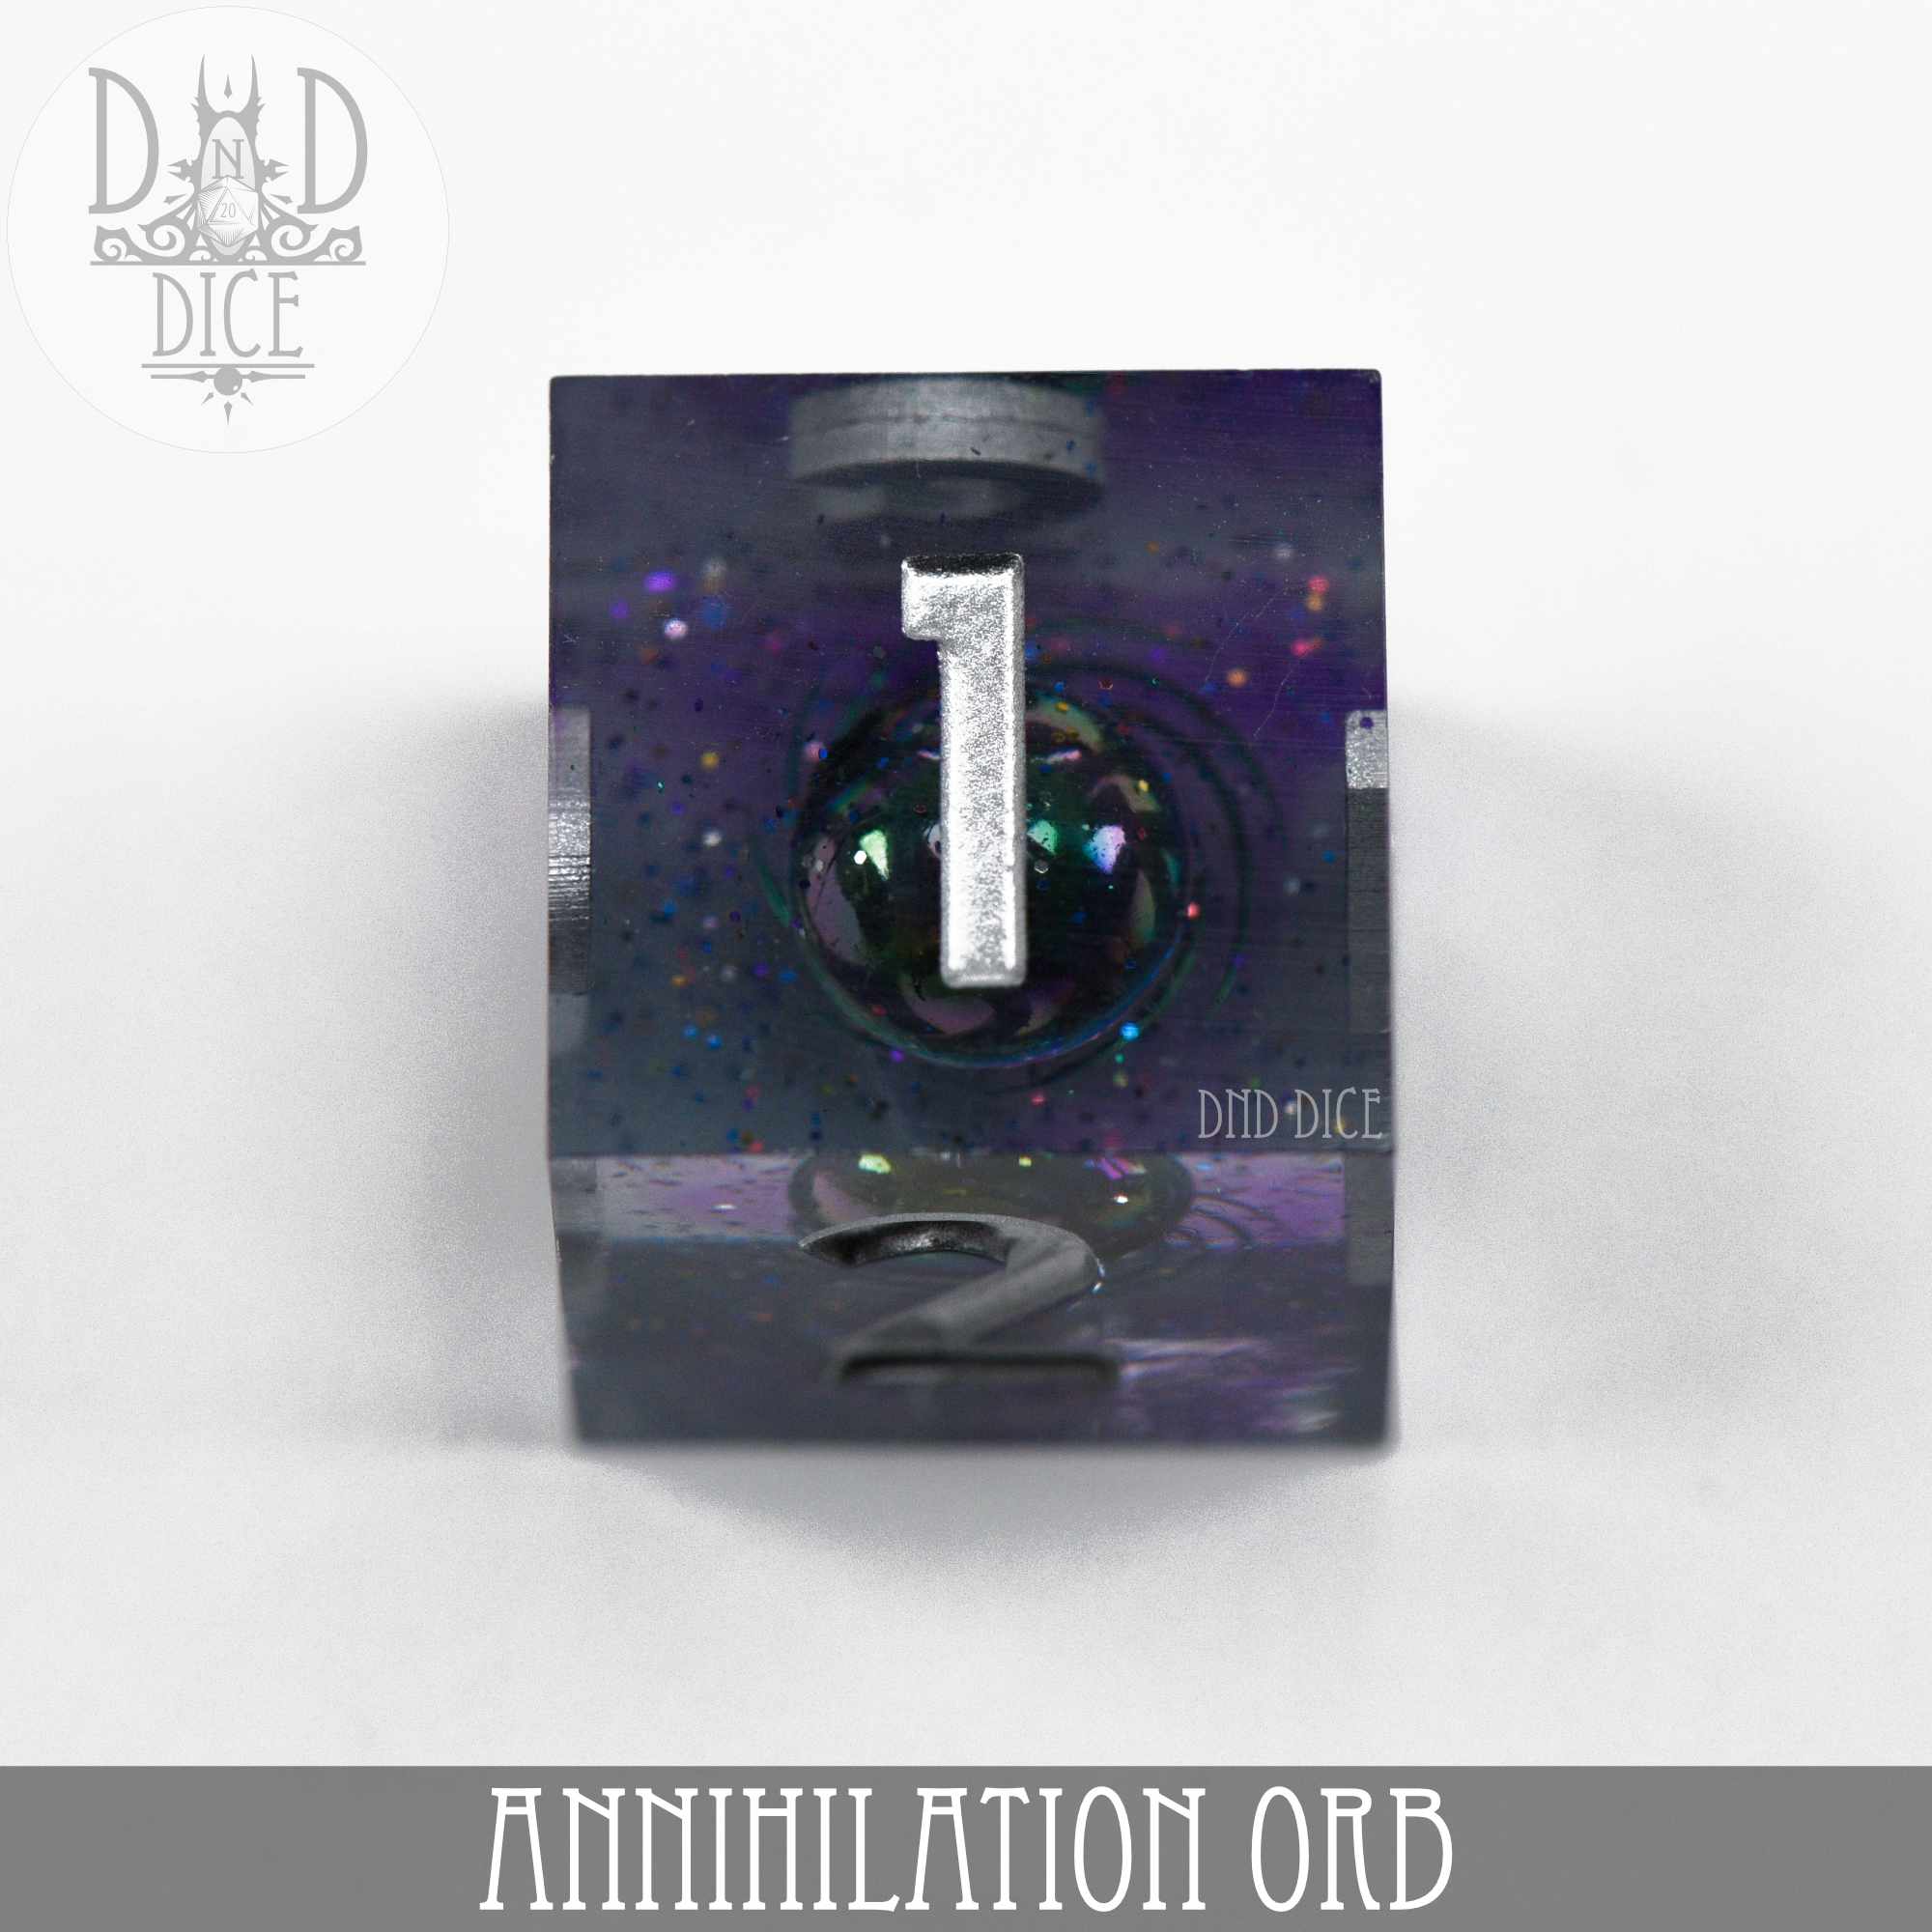 Annihilation Orb Handmade Dice Set